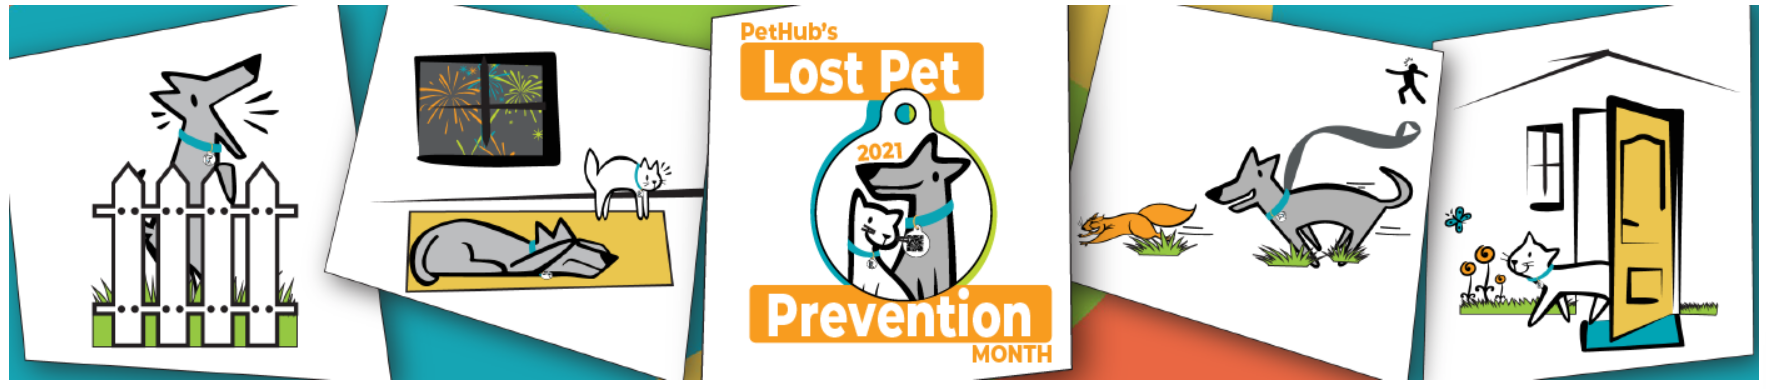 Pet Hub Lost Pet Prevention Month